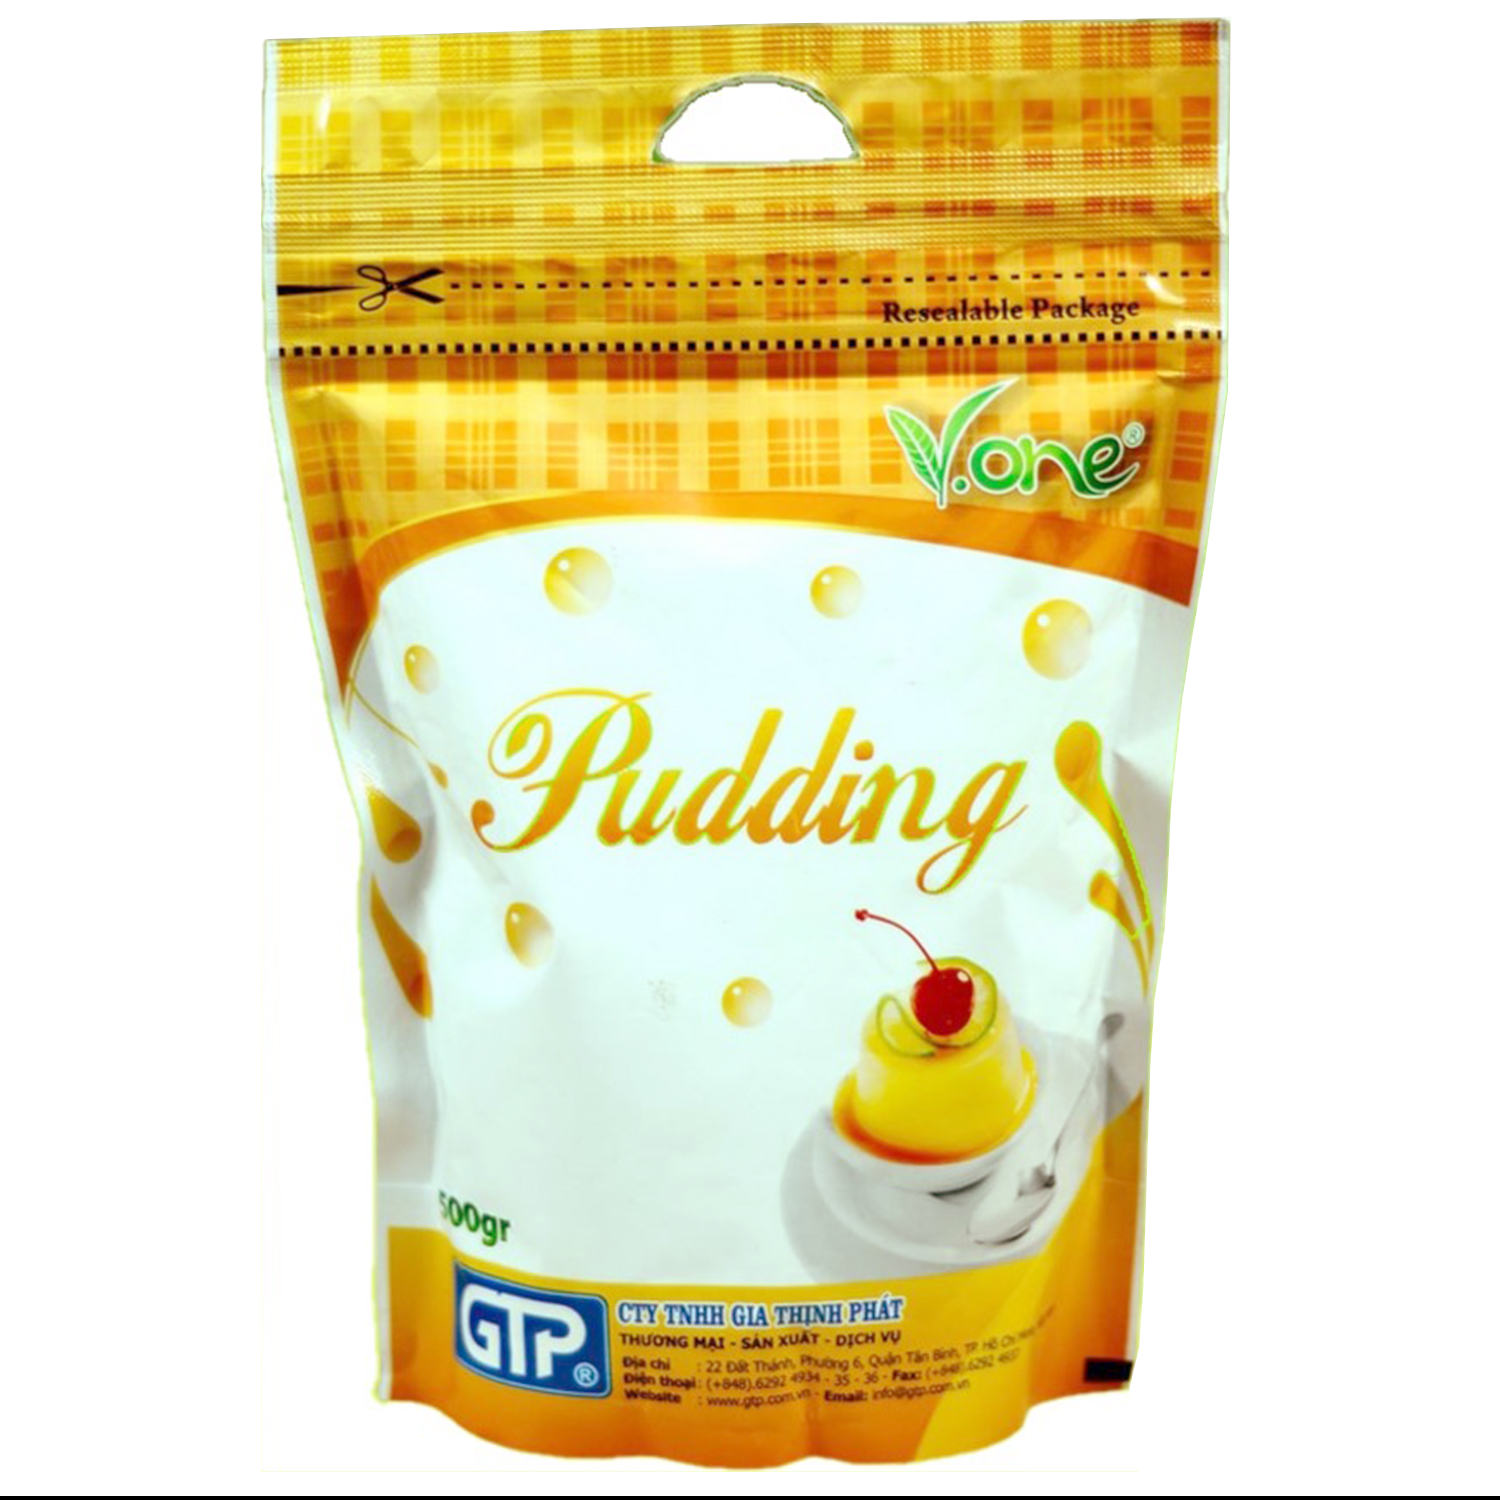 Pudding trứng GTP